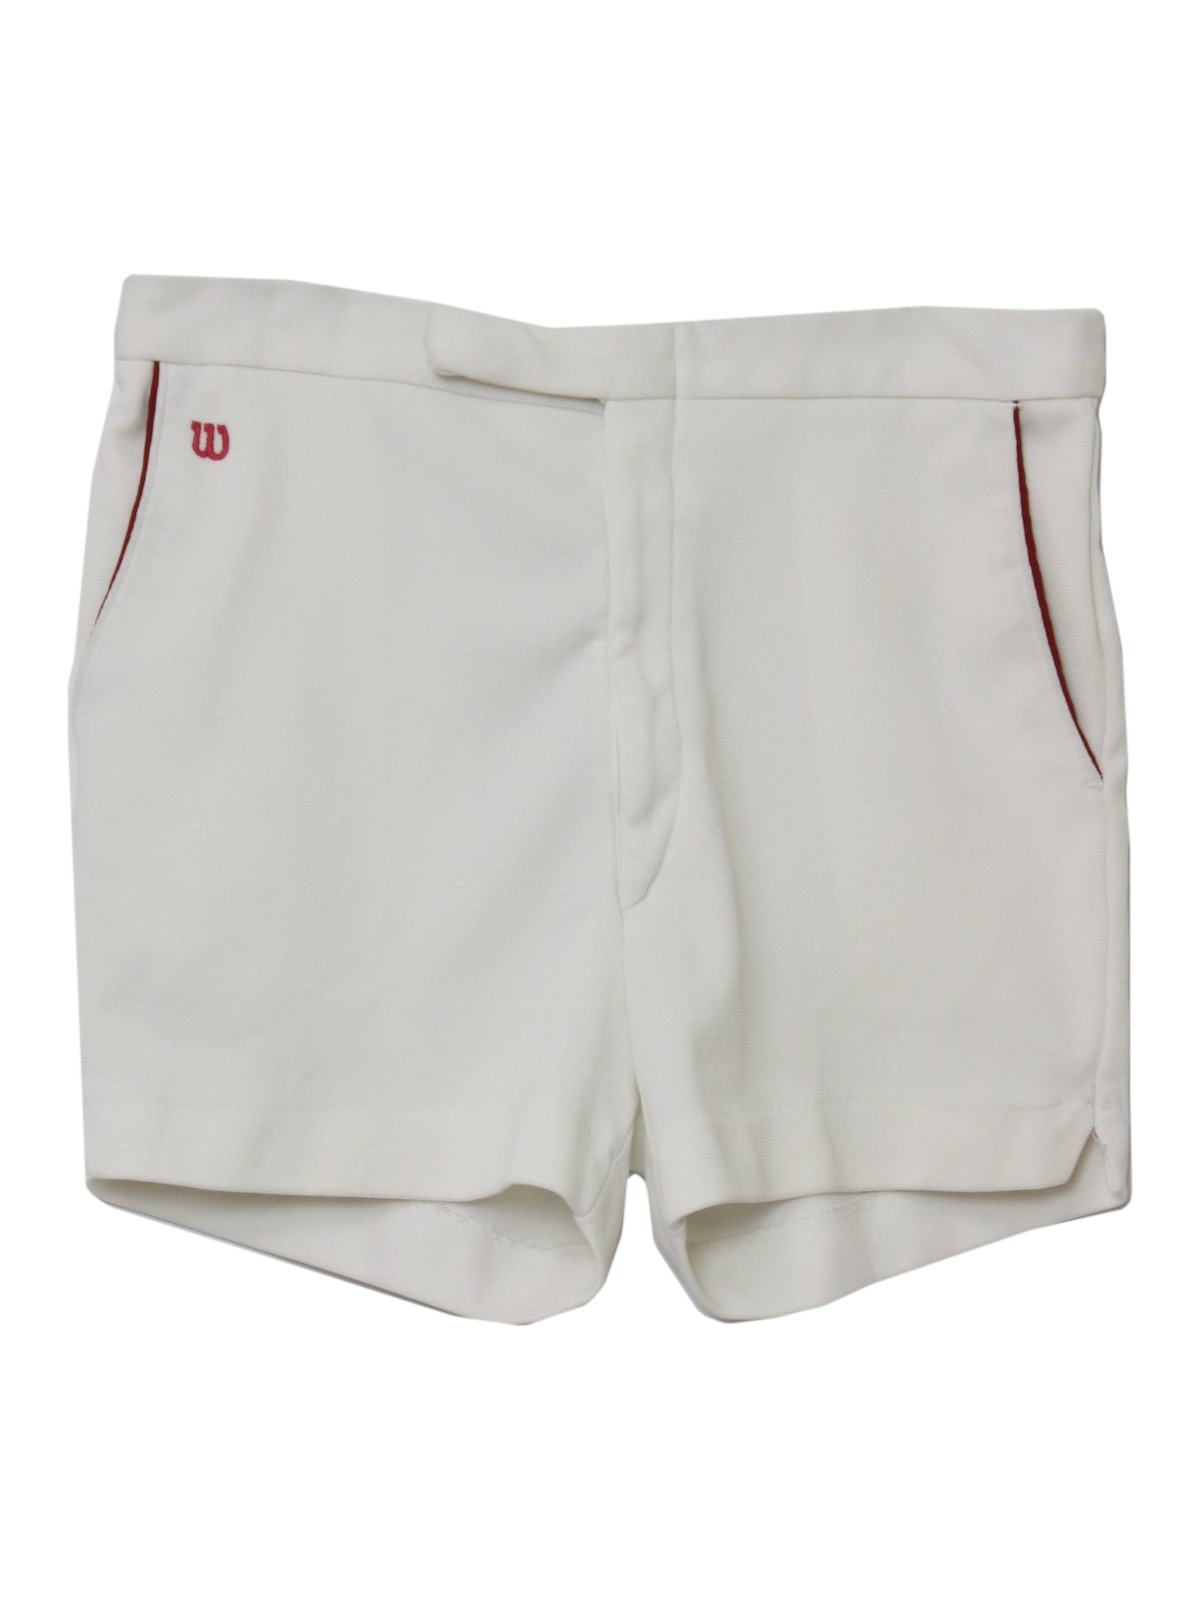 Retro Seventies Shorts: 70s -Wilson Tennis Apparel- Mens white ...